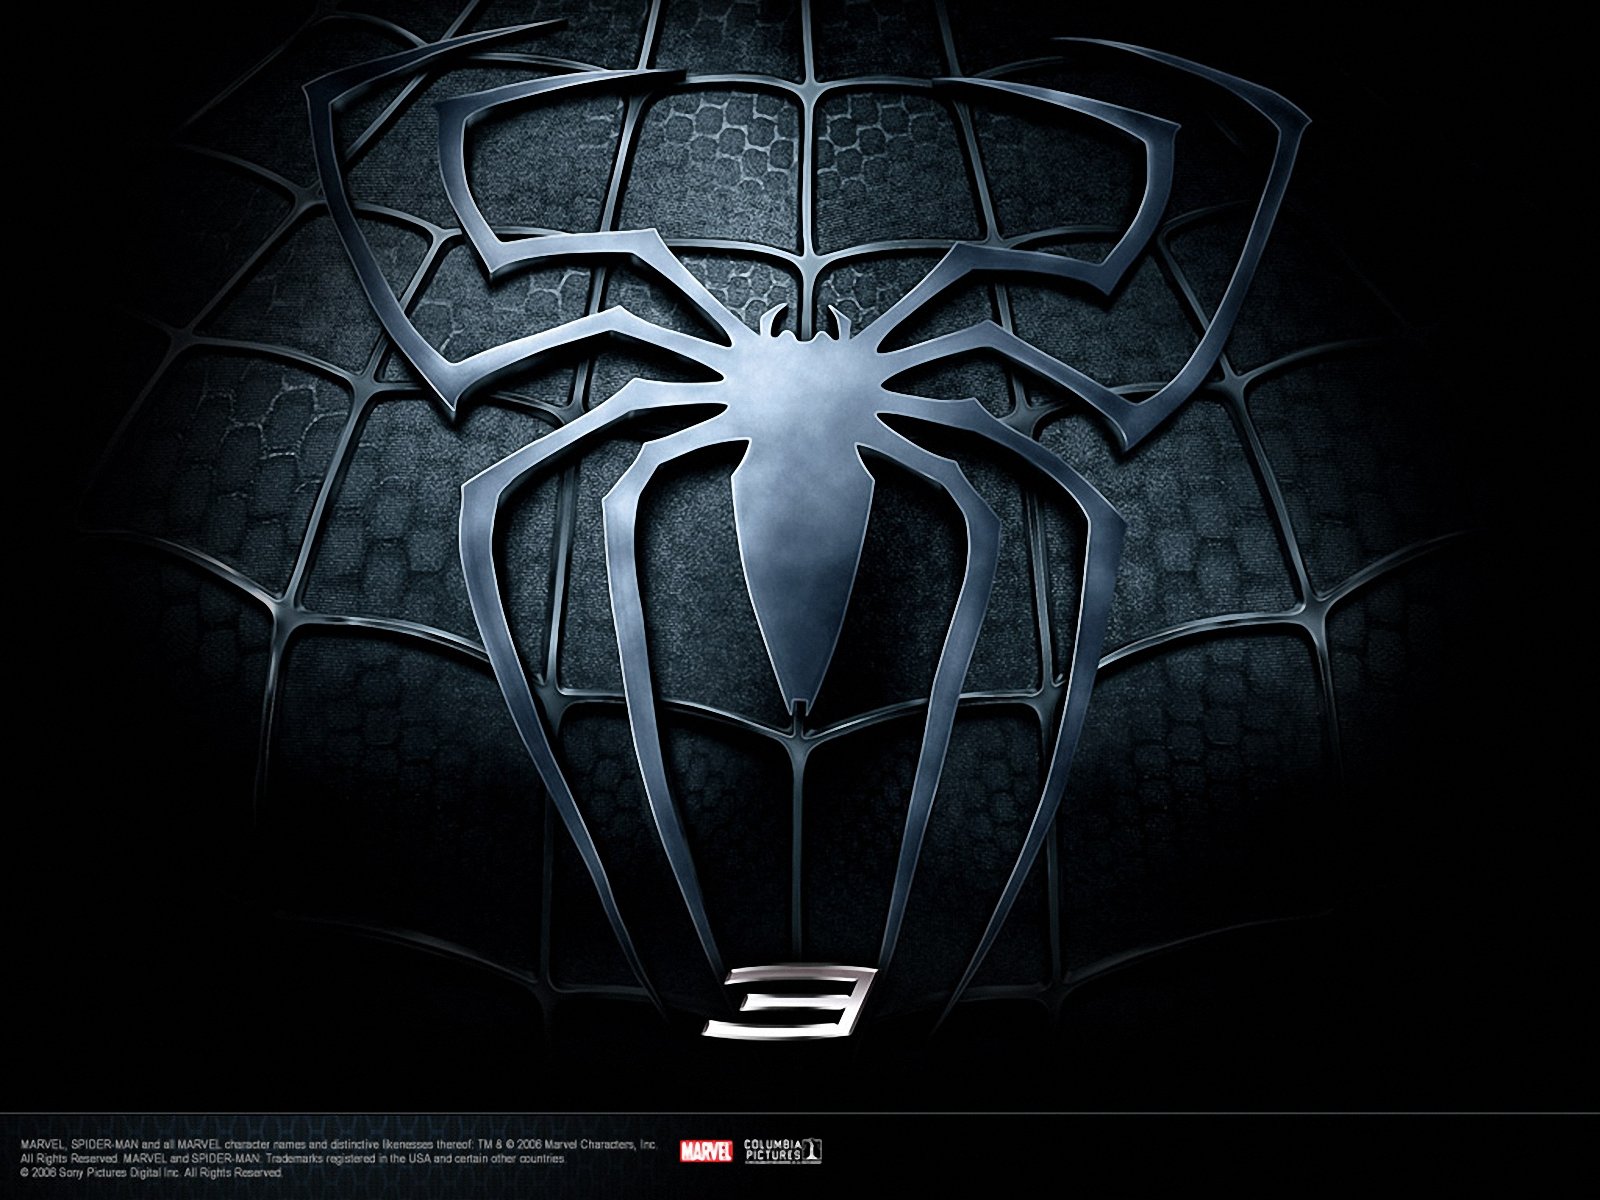 Imagini cu Spiderman wallpaper hd cu spiderman Wallpapereorg 1600x1200